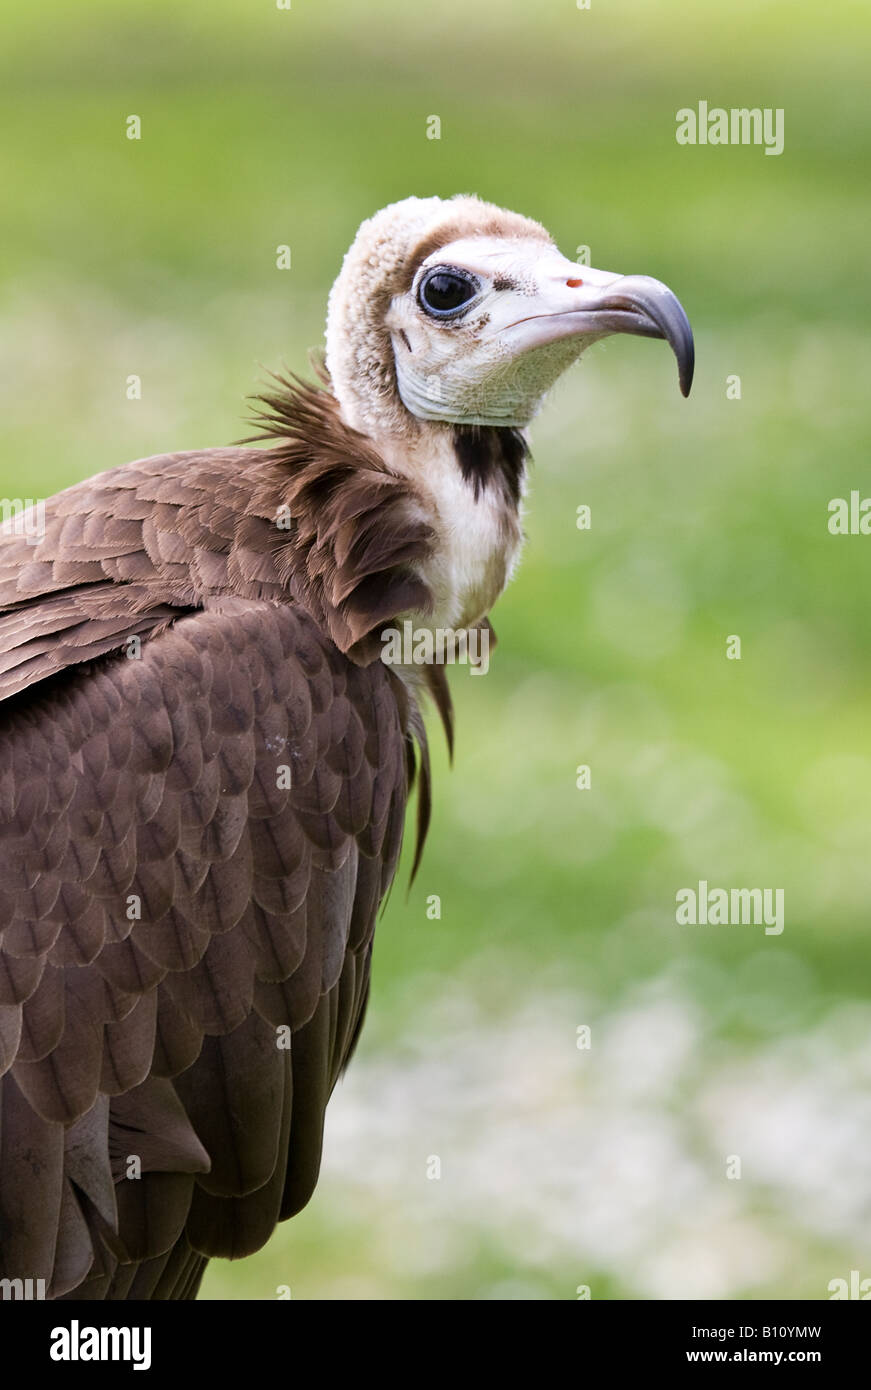 Bird of Prey - African Vulcher Stock Photo - Alamy